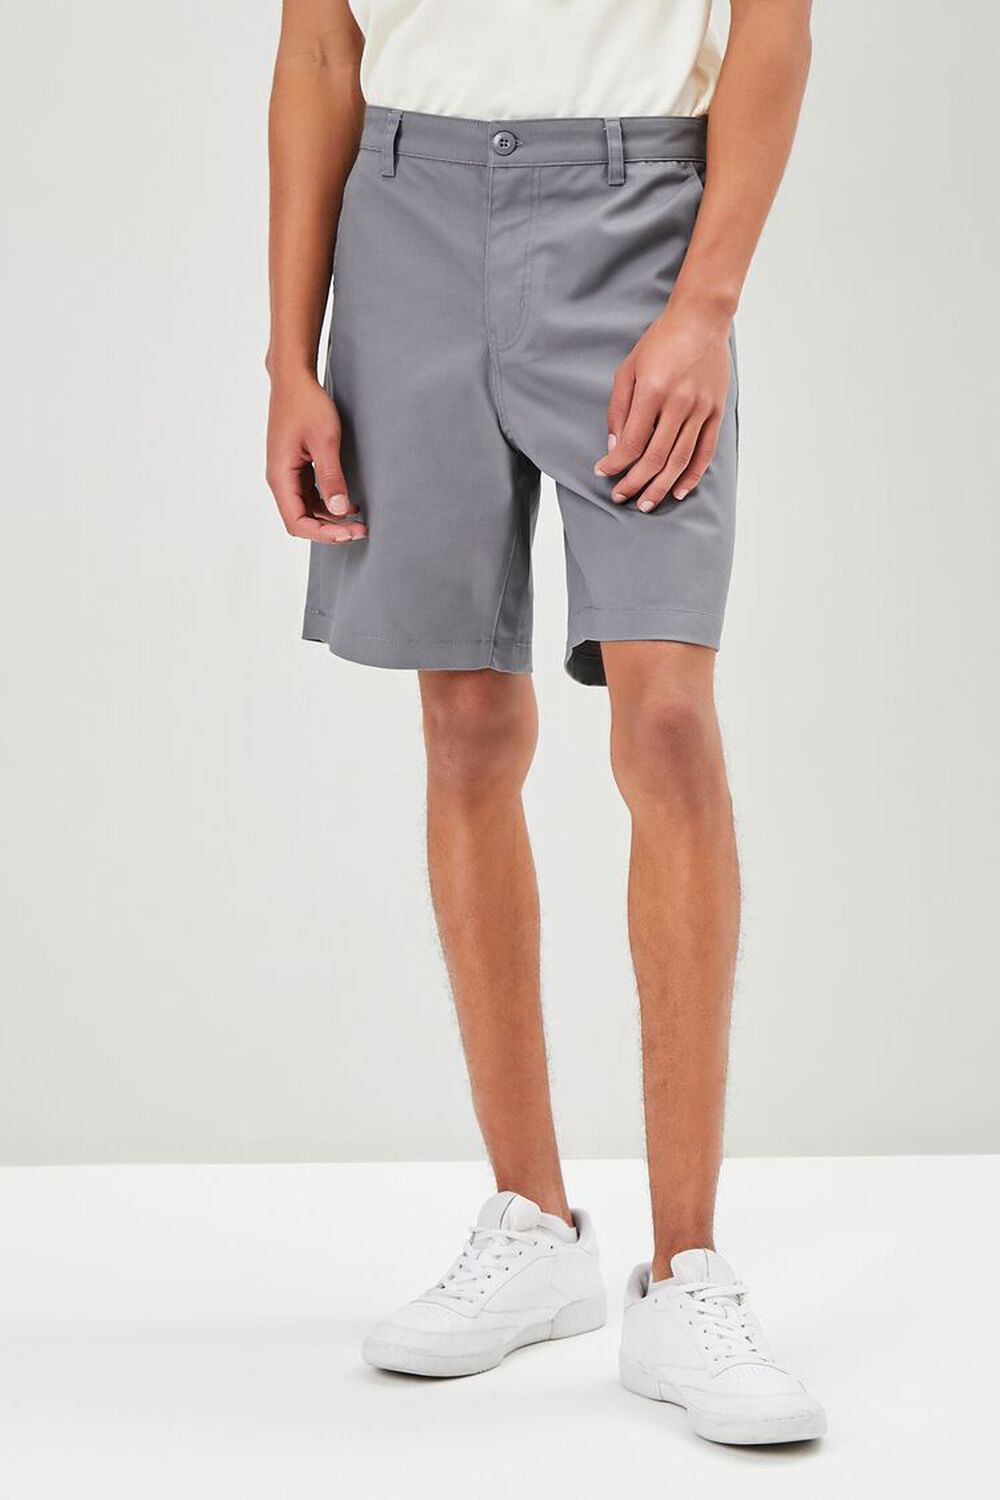 GREY Pocket Vented-Hem Shorts, image 2